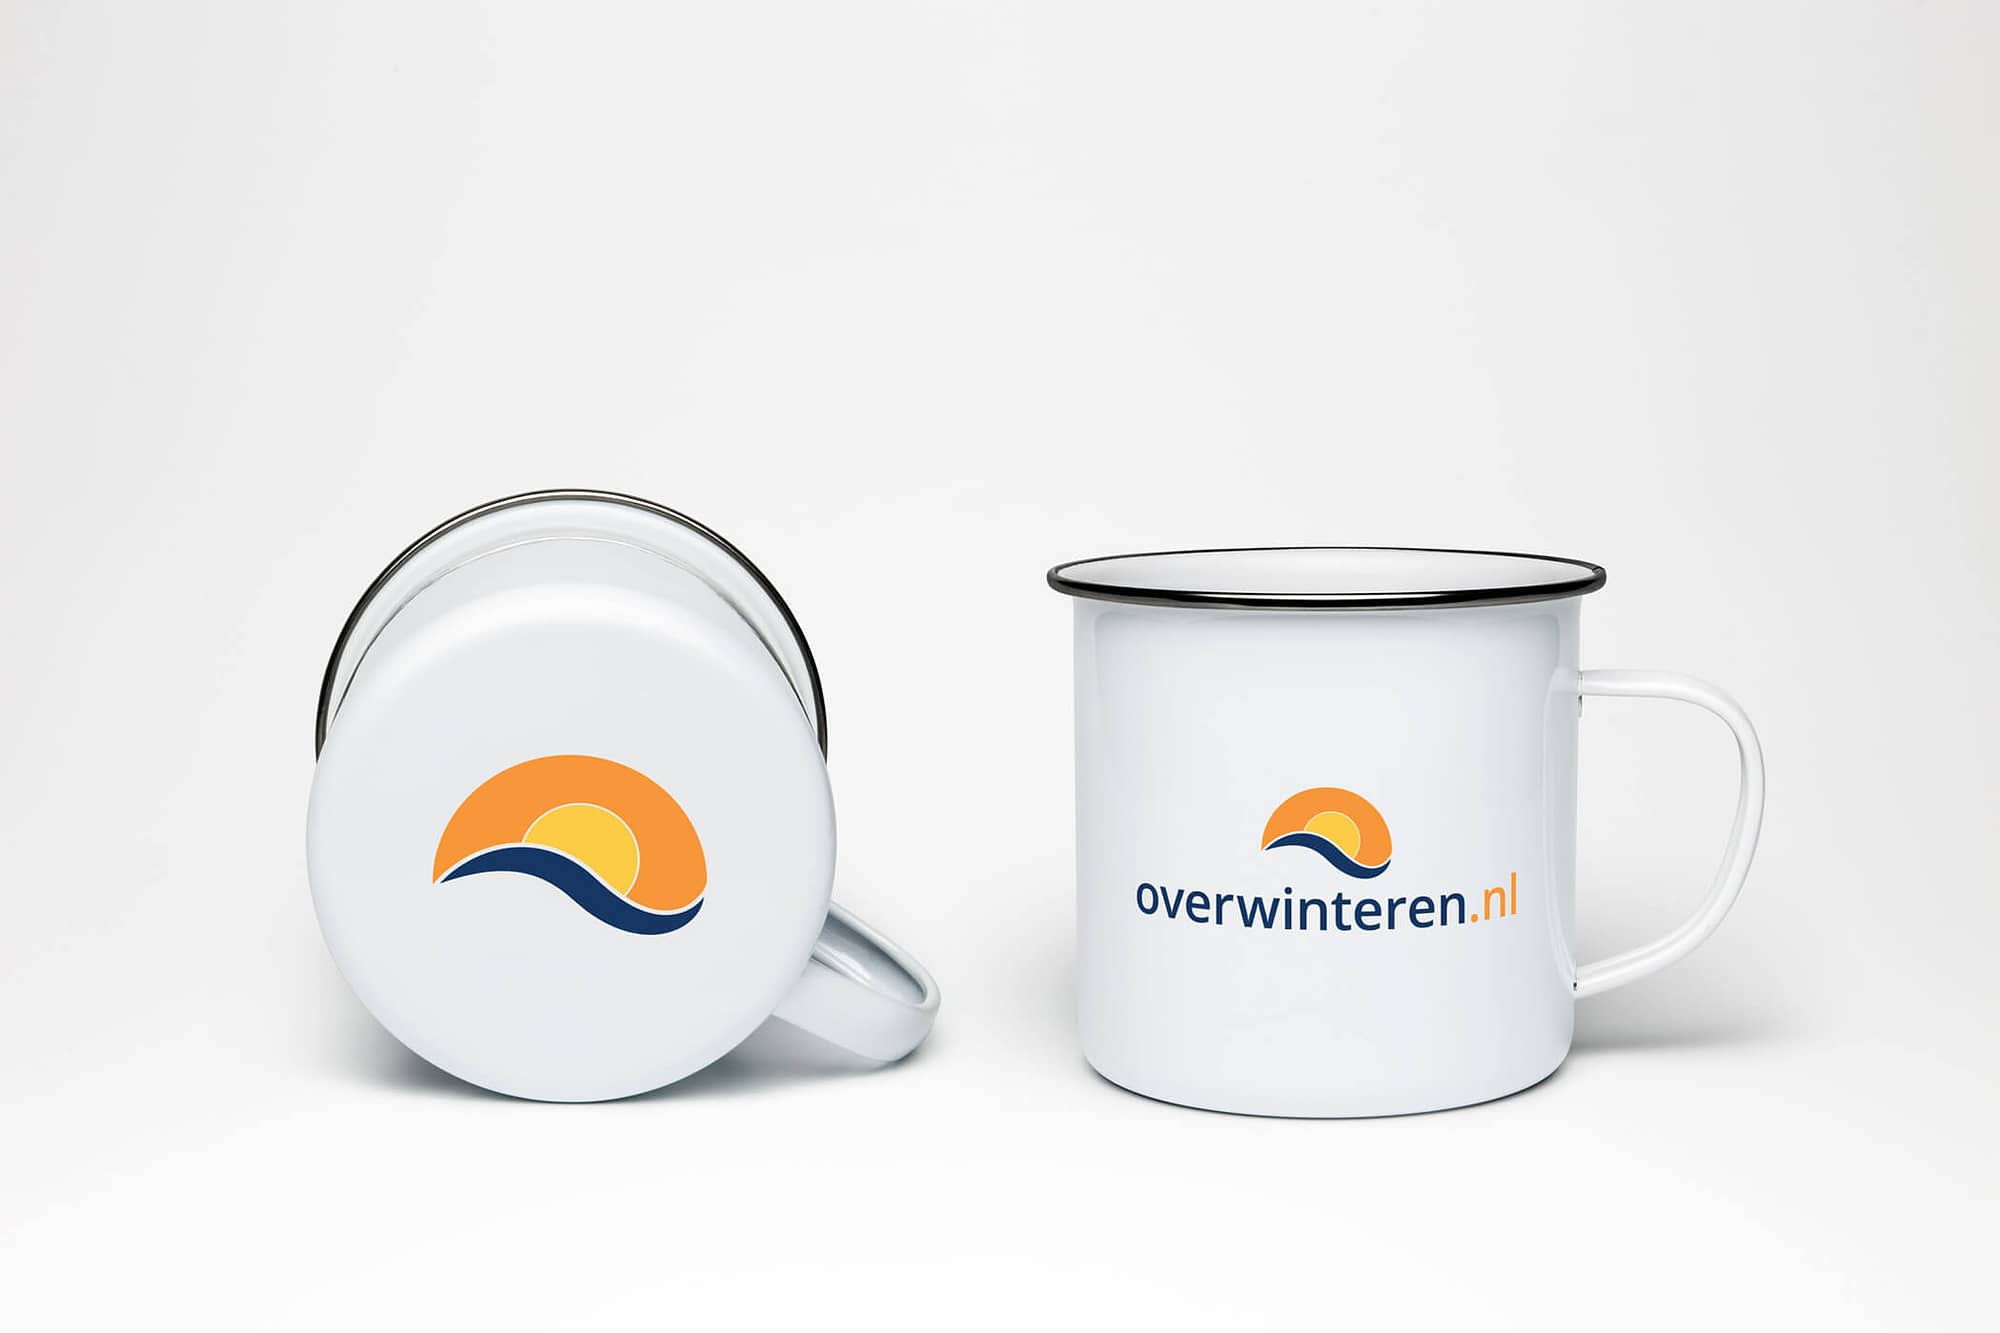 hibernate vacation rental homes website logo design on mugs